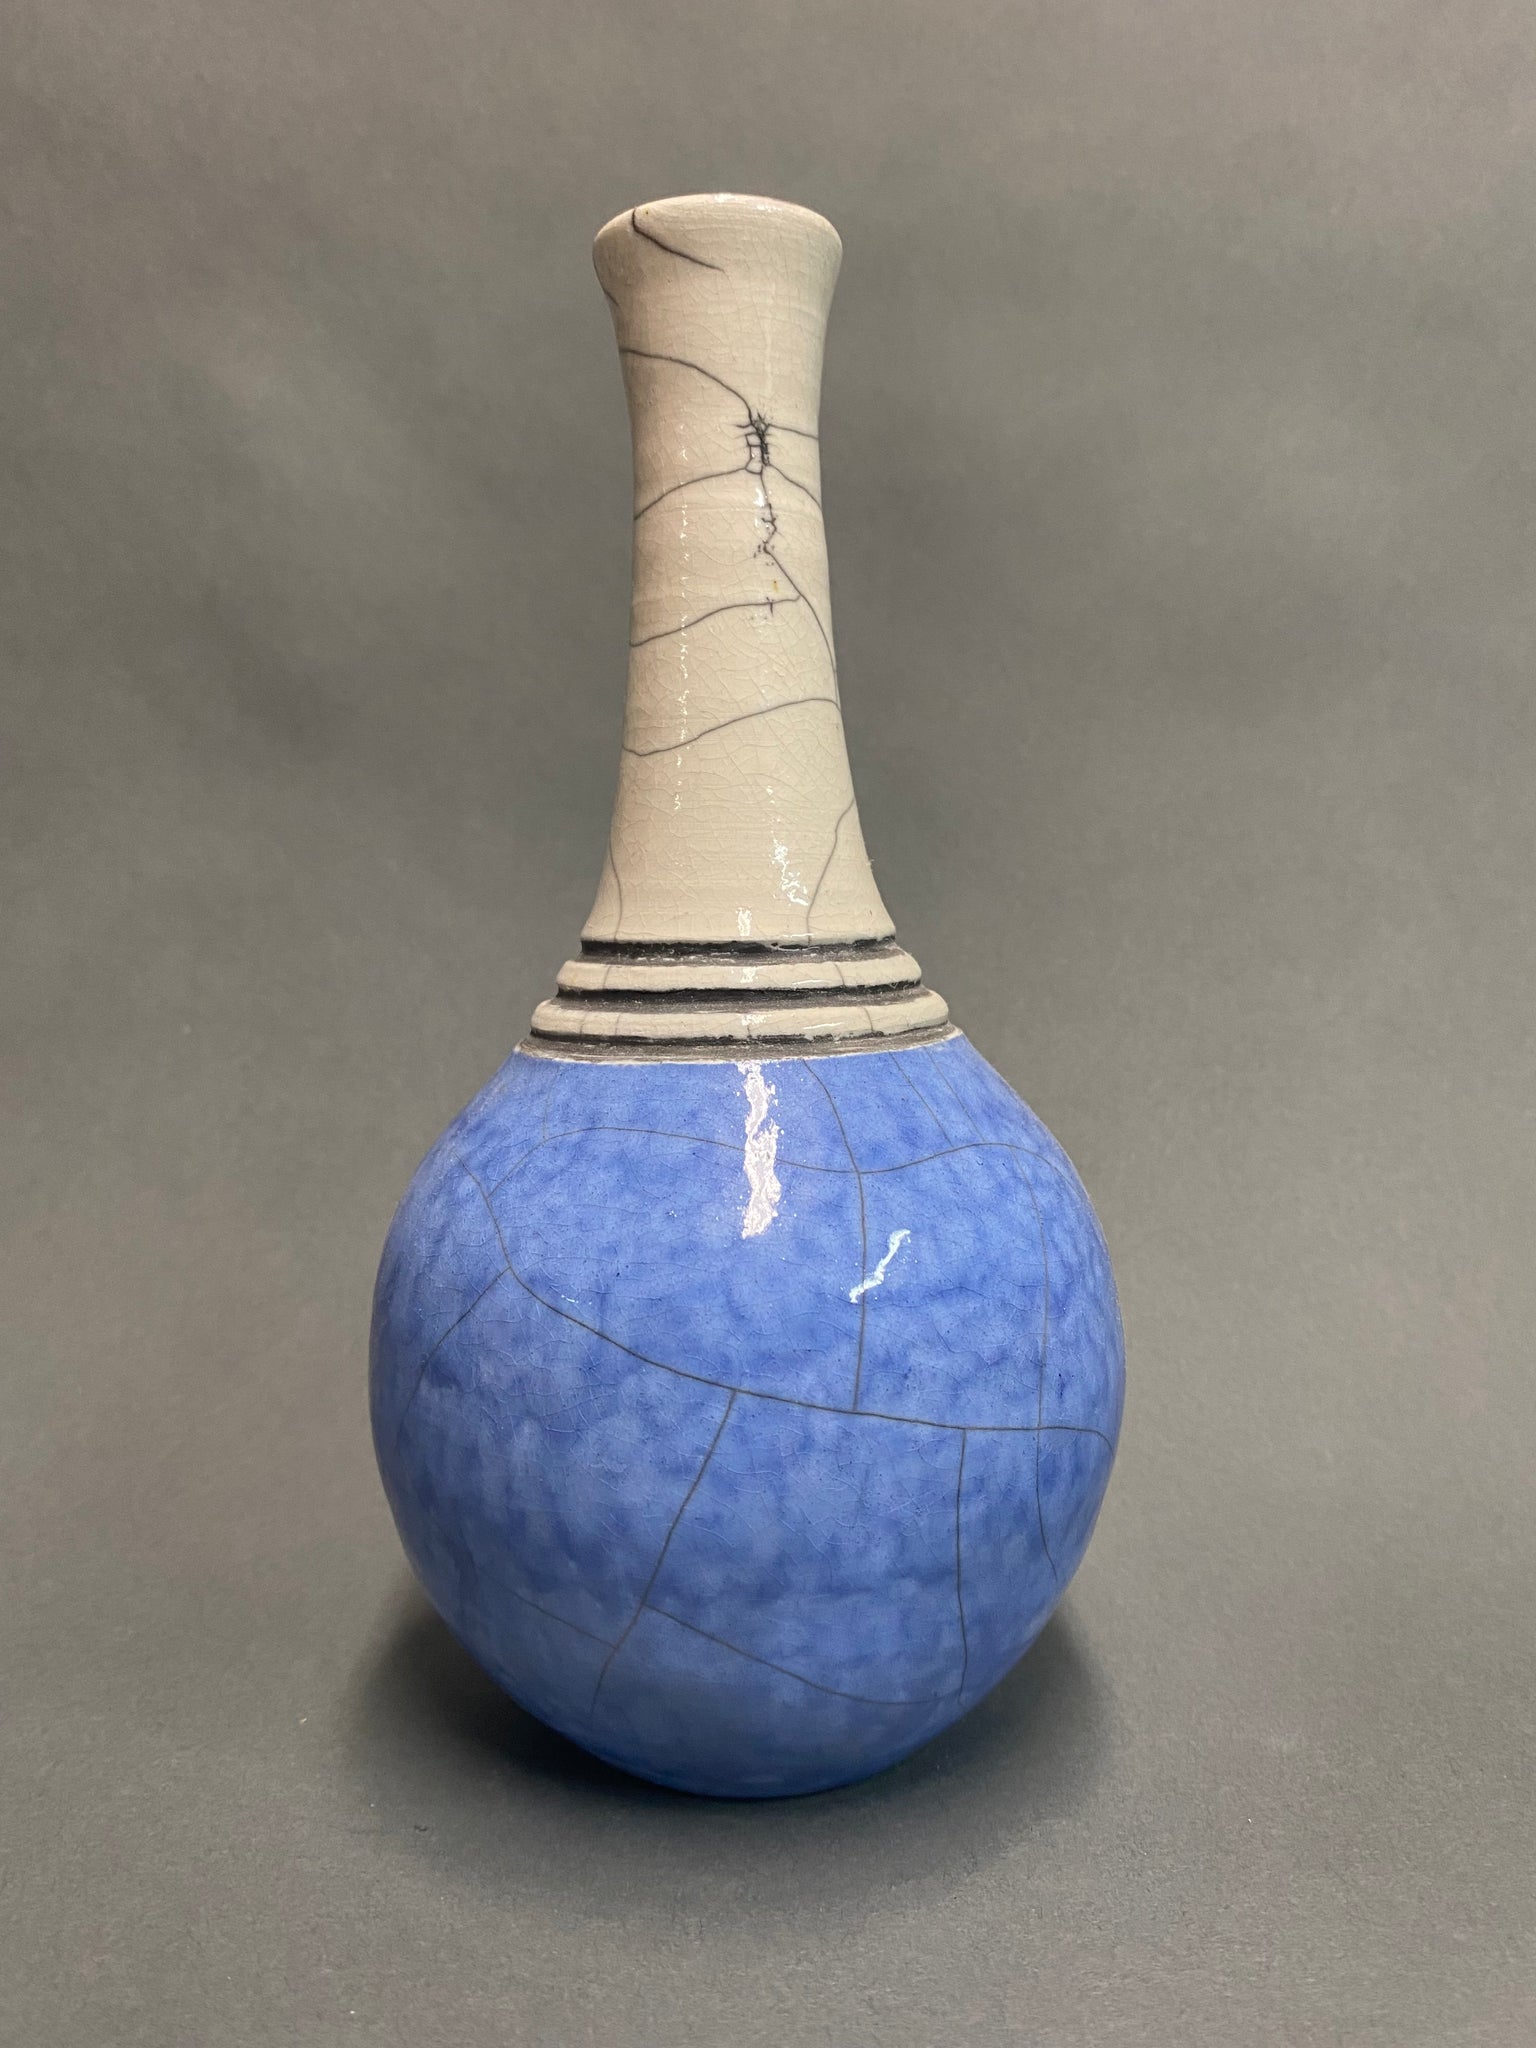 white stoneware blue engine carved raku fired ceramic vase created by Jane Kleiman